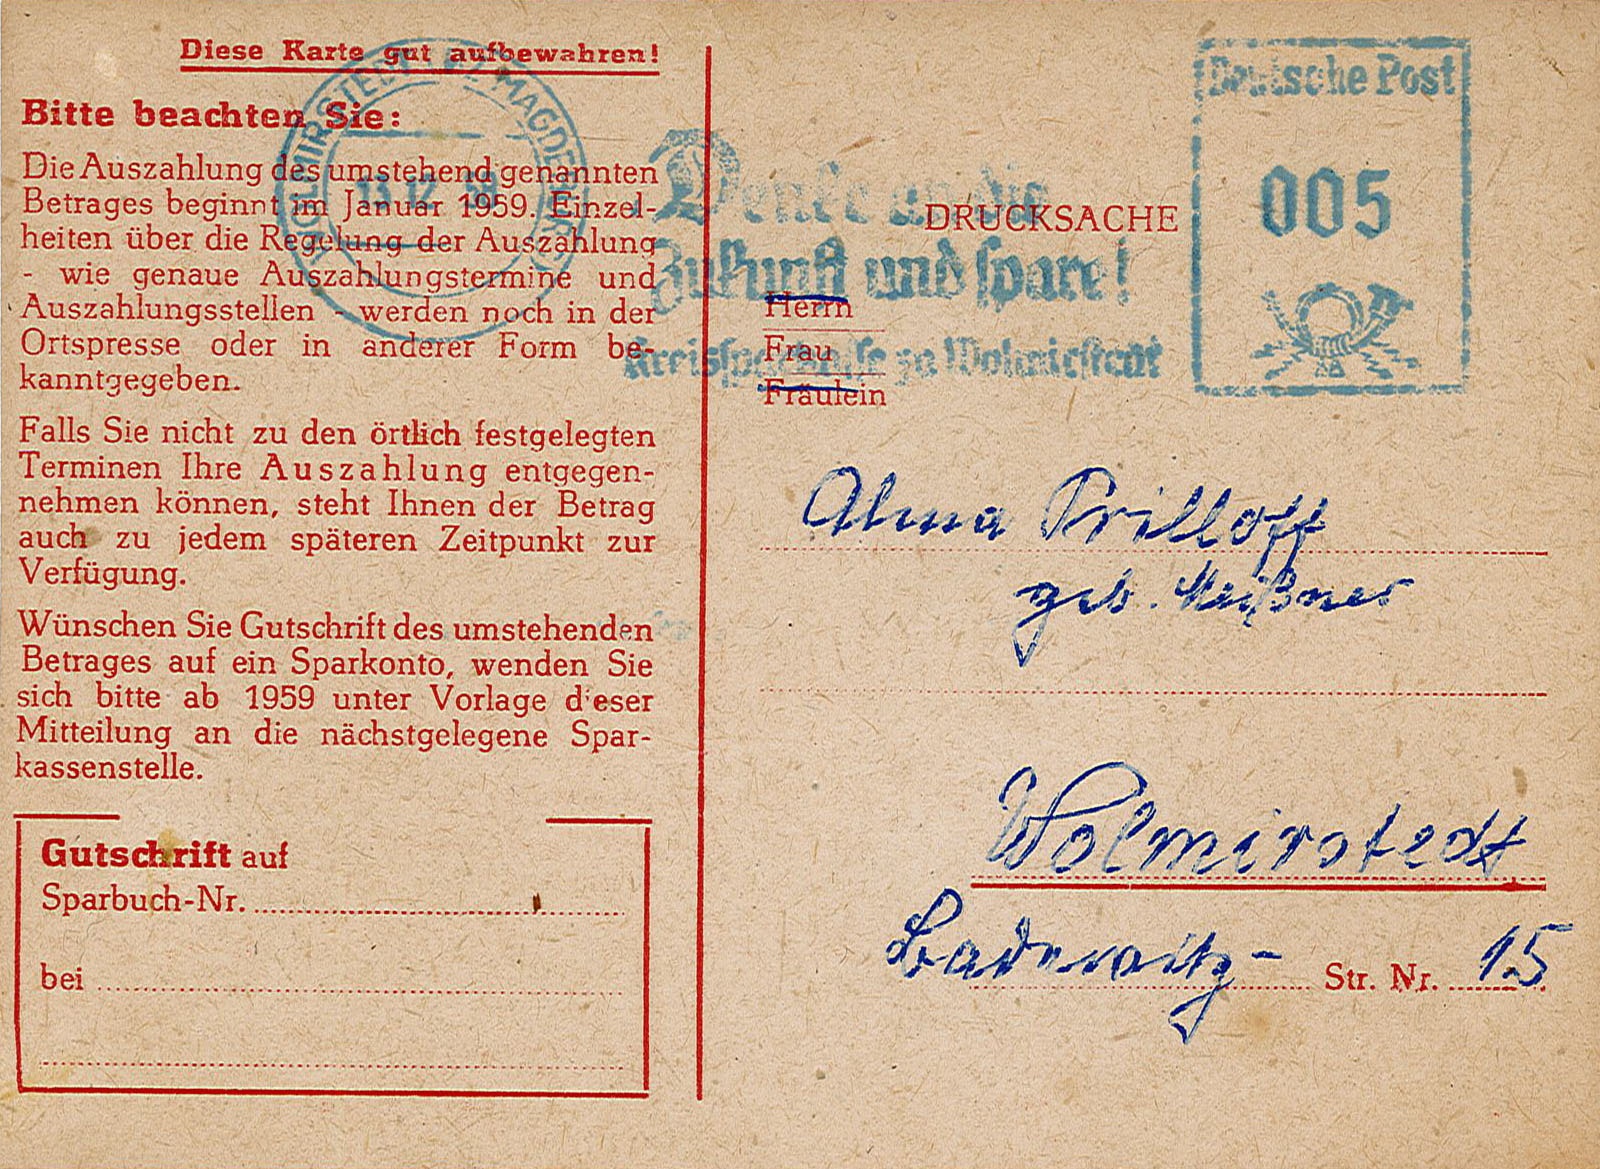 Postkarte "Betr.: Uraltguthaben-Auszahlung" an Alma Prilloff, 13.12.1958 (Museum Wolmirstedt RR-F)